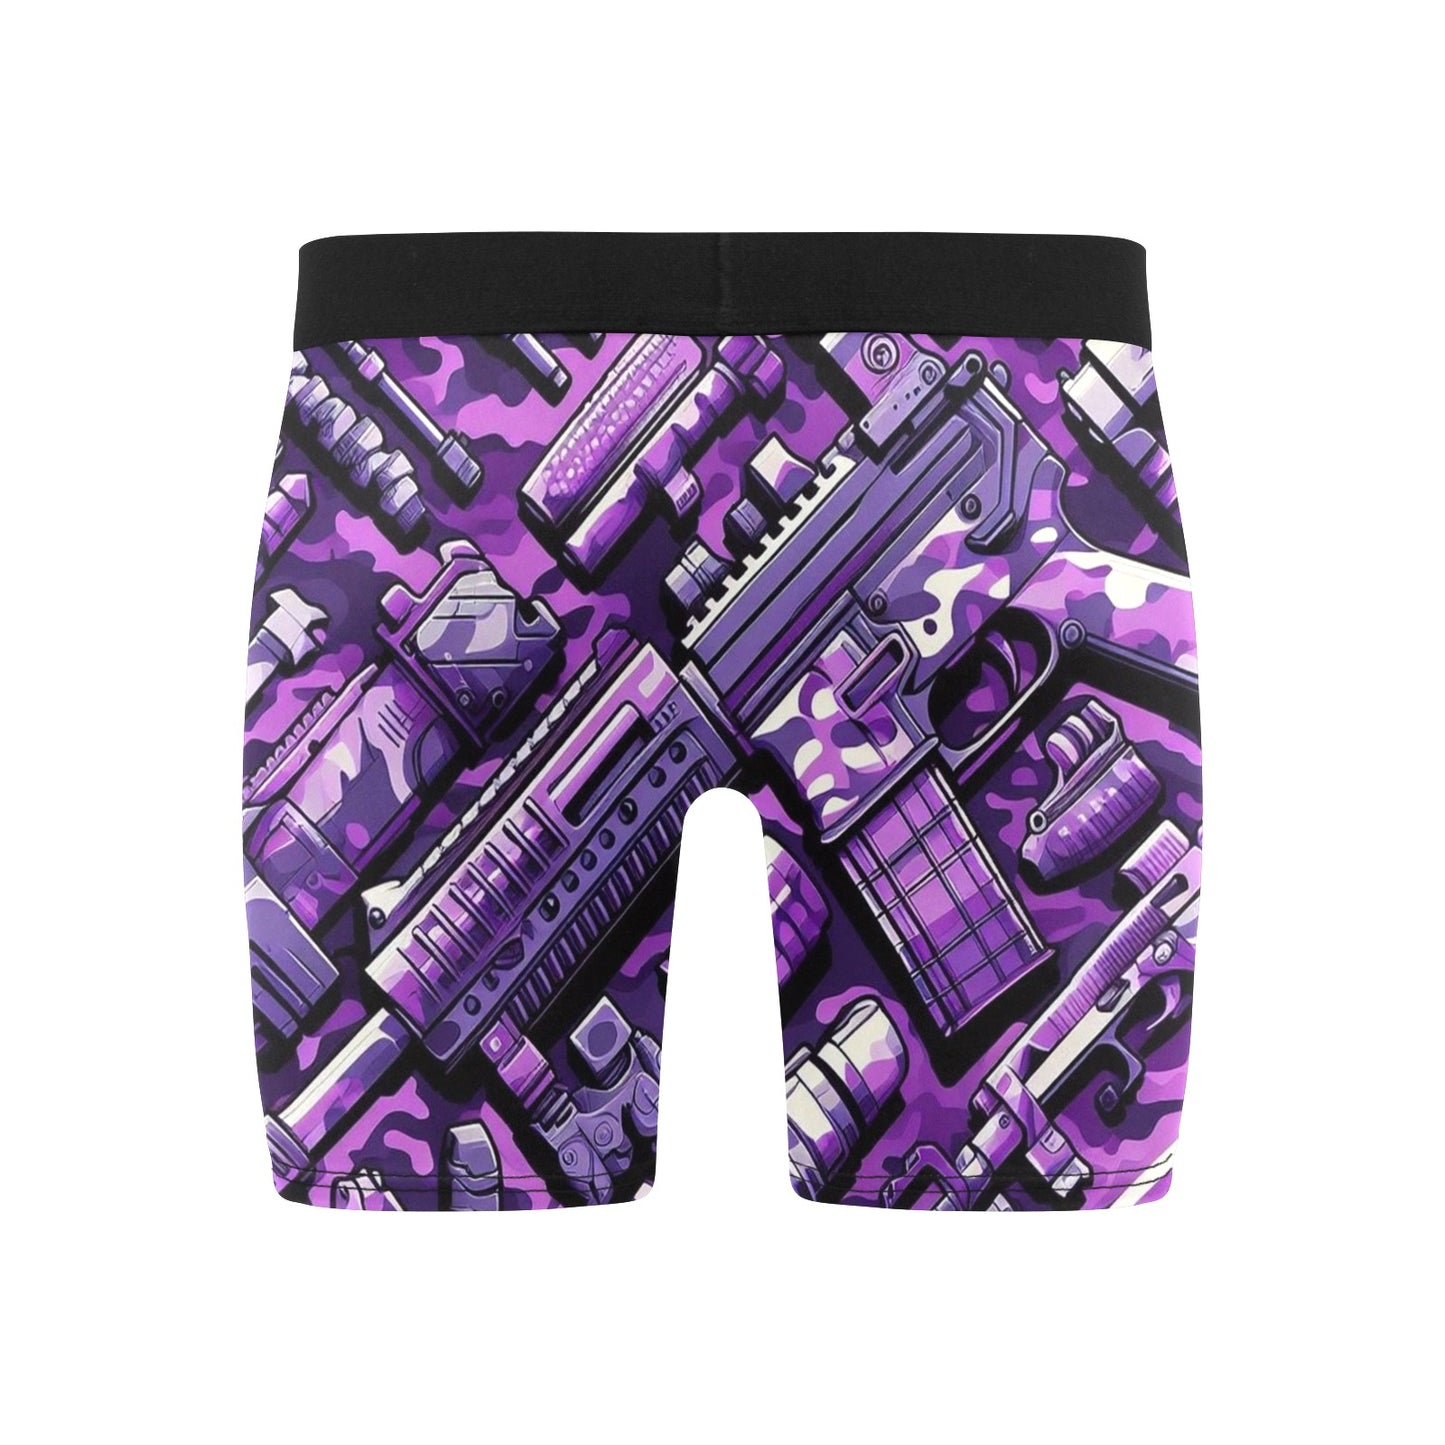 Zen Boxers Long - Purple Camo